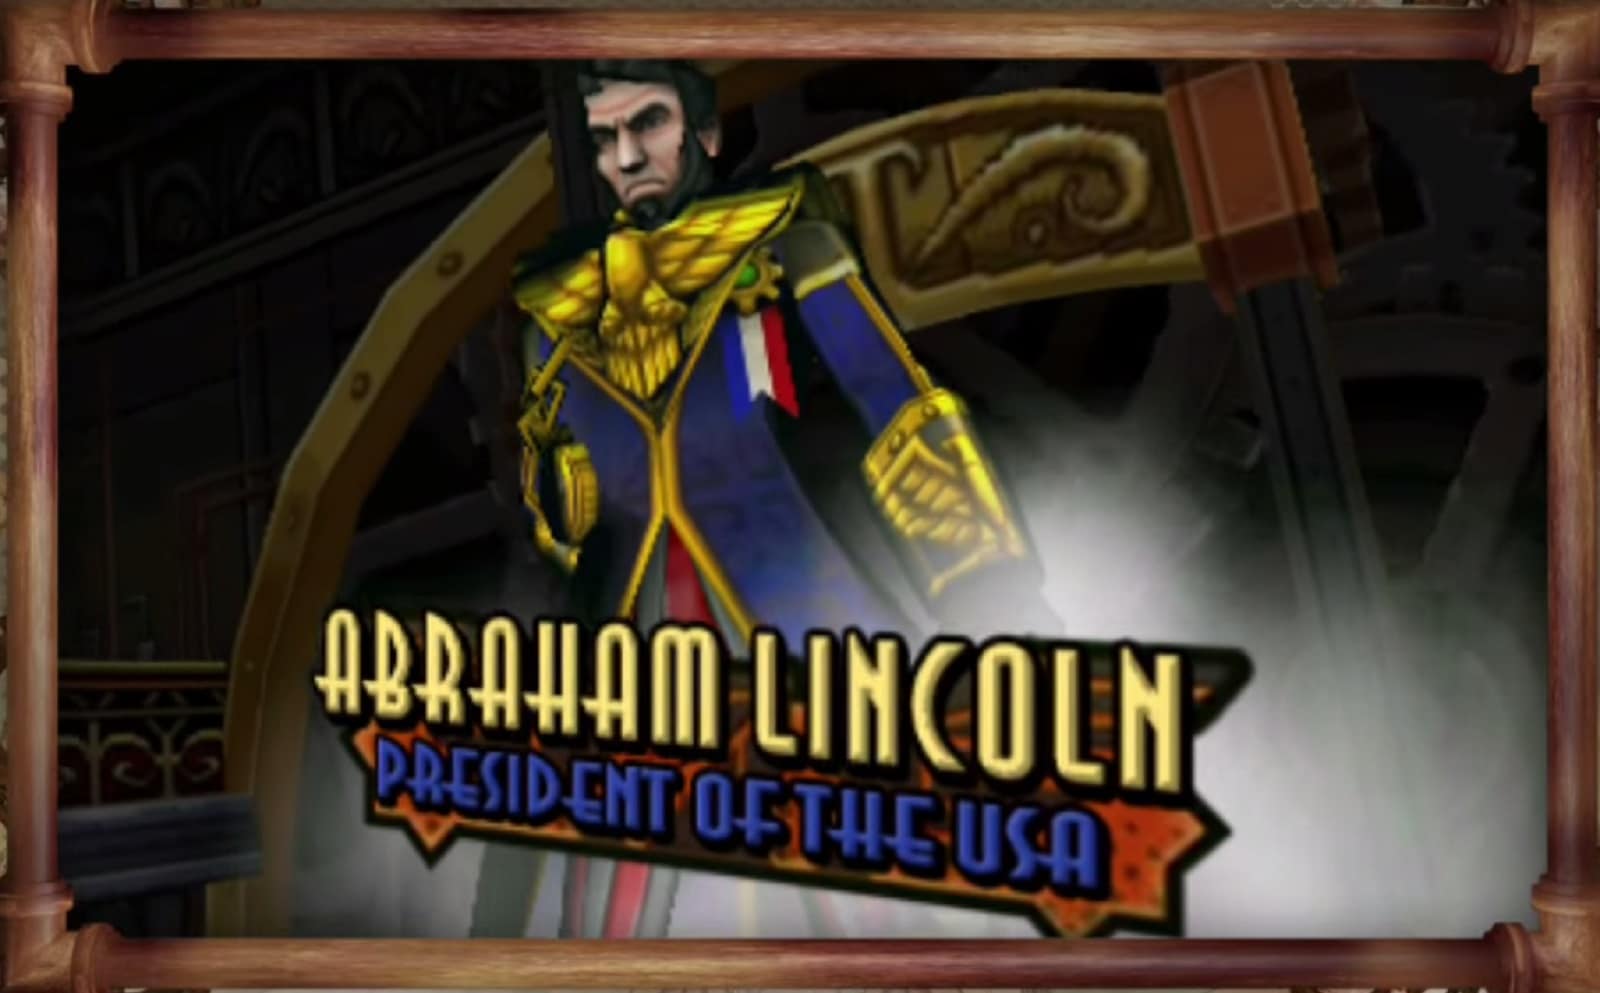 Codename Steam Abraham Lincoln Character President of the USA Cutscene Screenshot 3DS